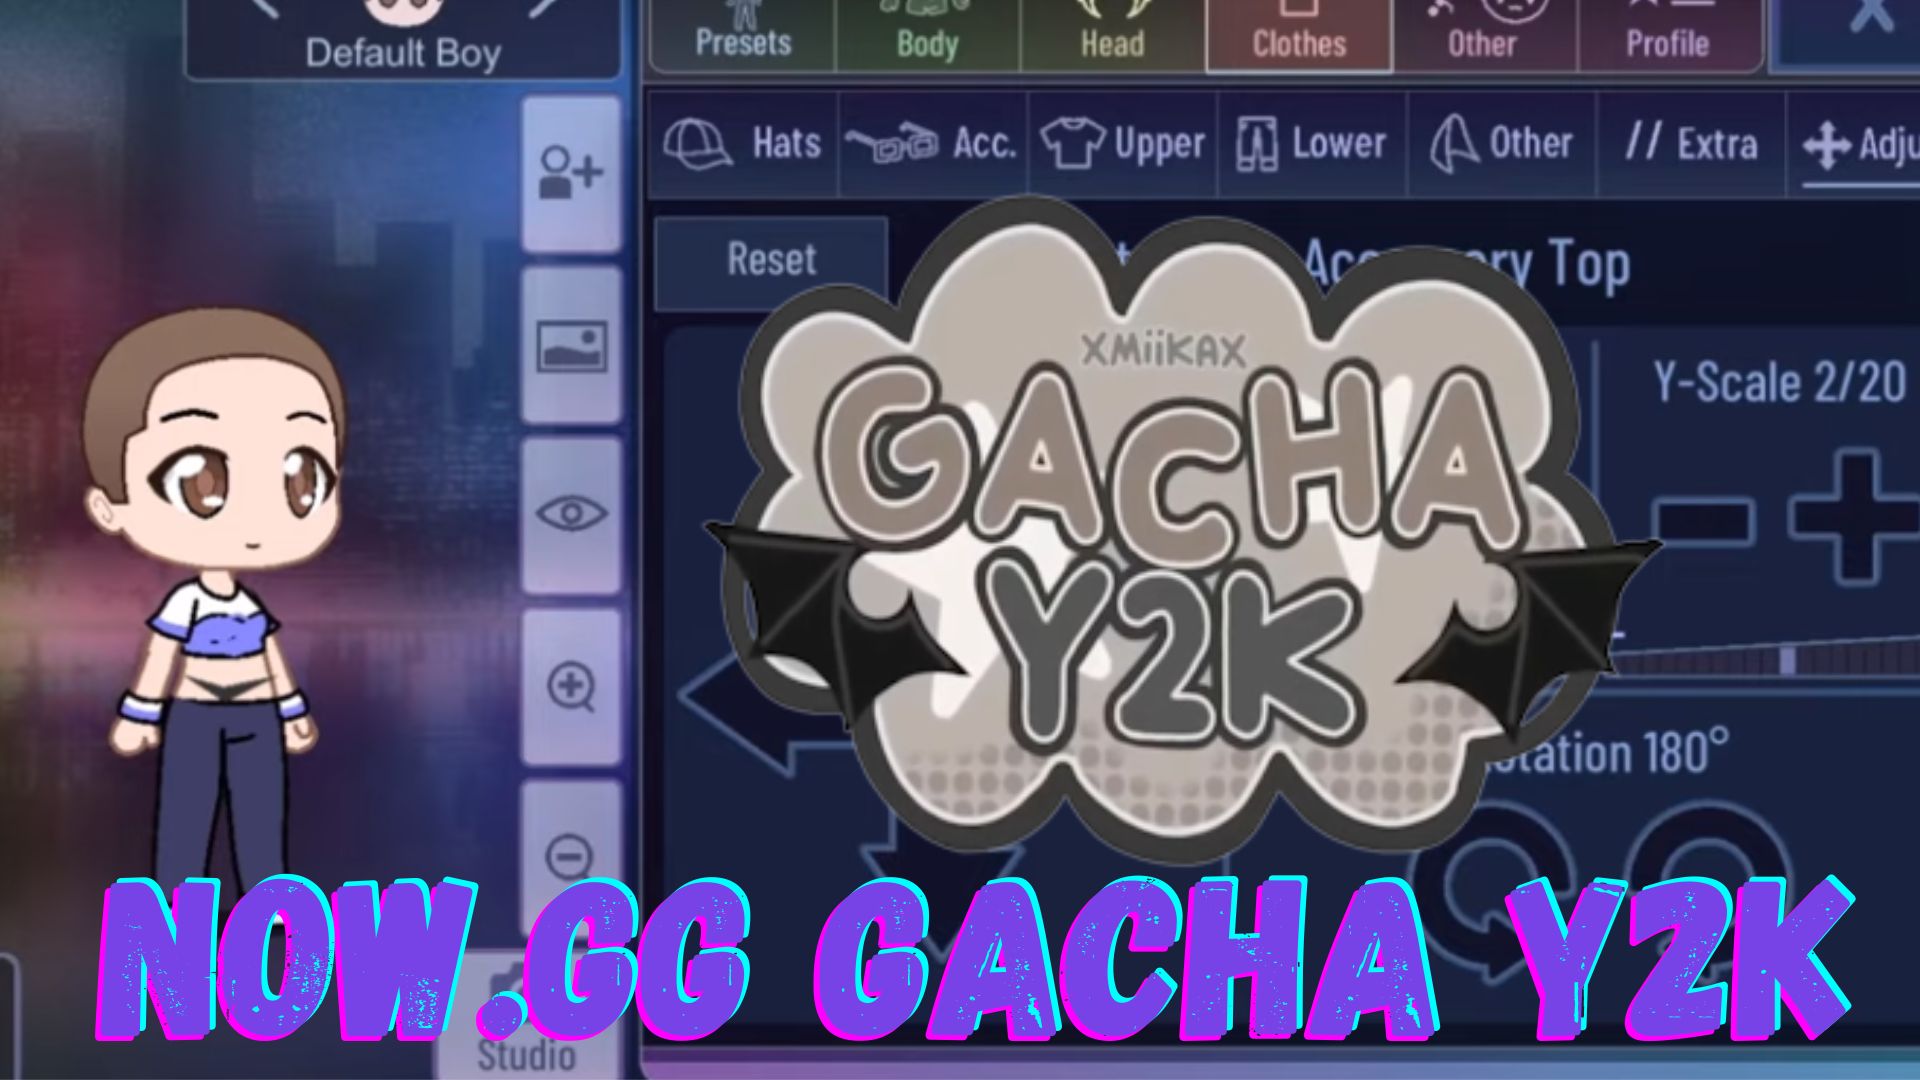 Gacha Y2K Mod Download - Android, iOS, PC